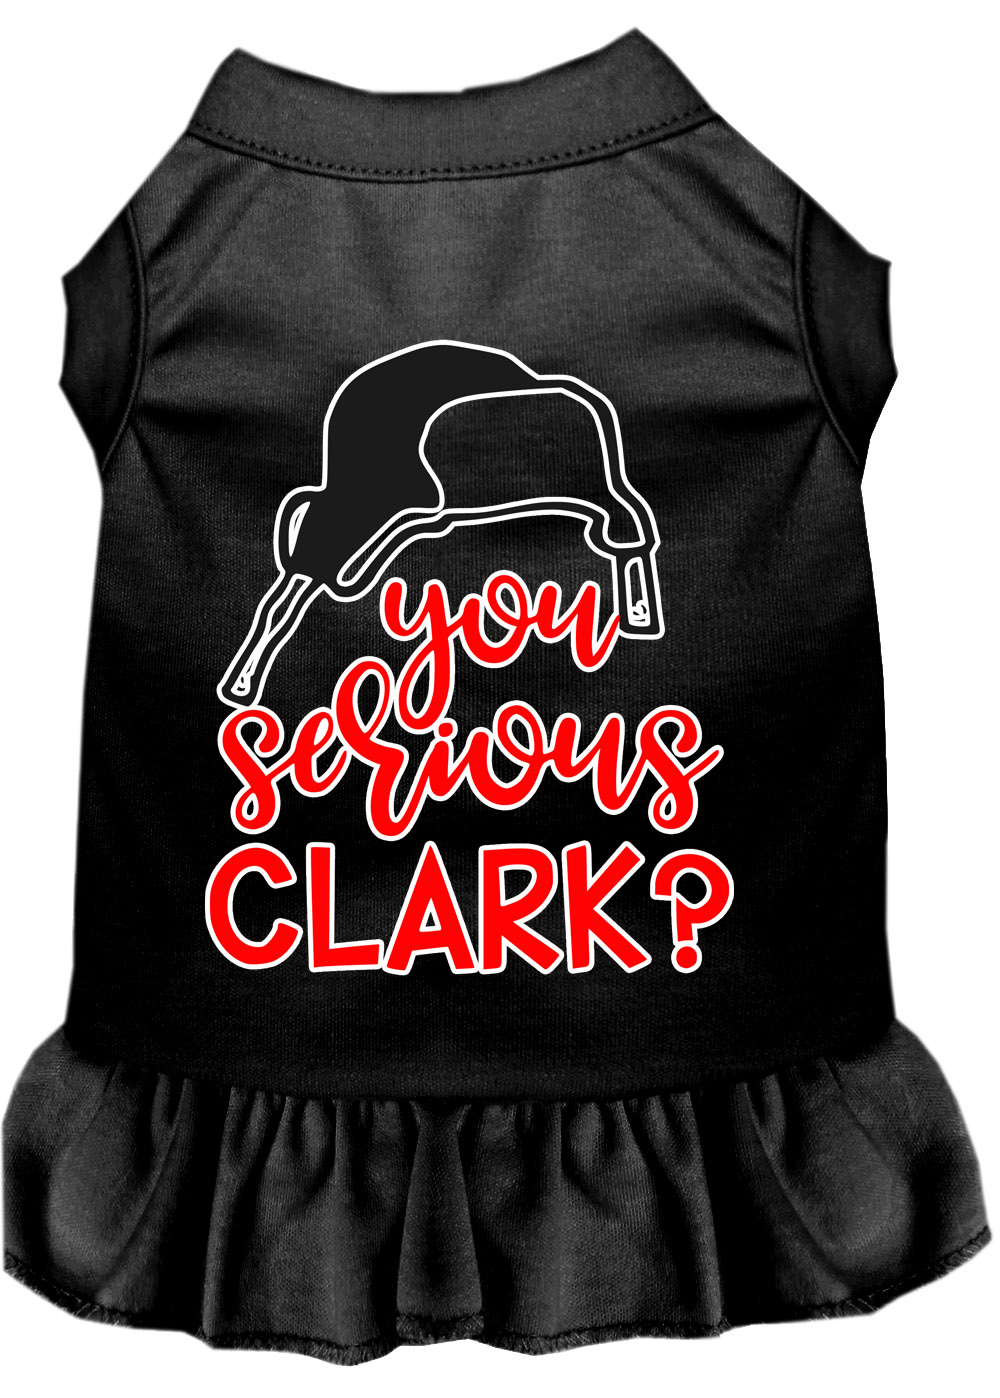 You Serious Clark? Screen Print Dog Dress Black Med